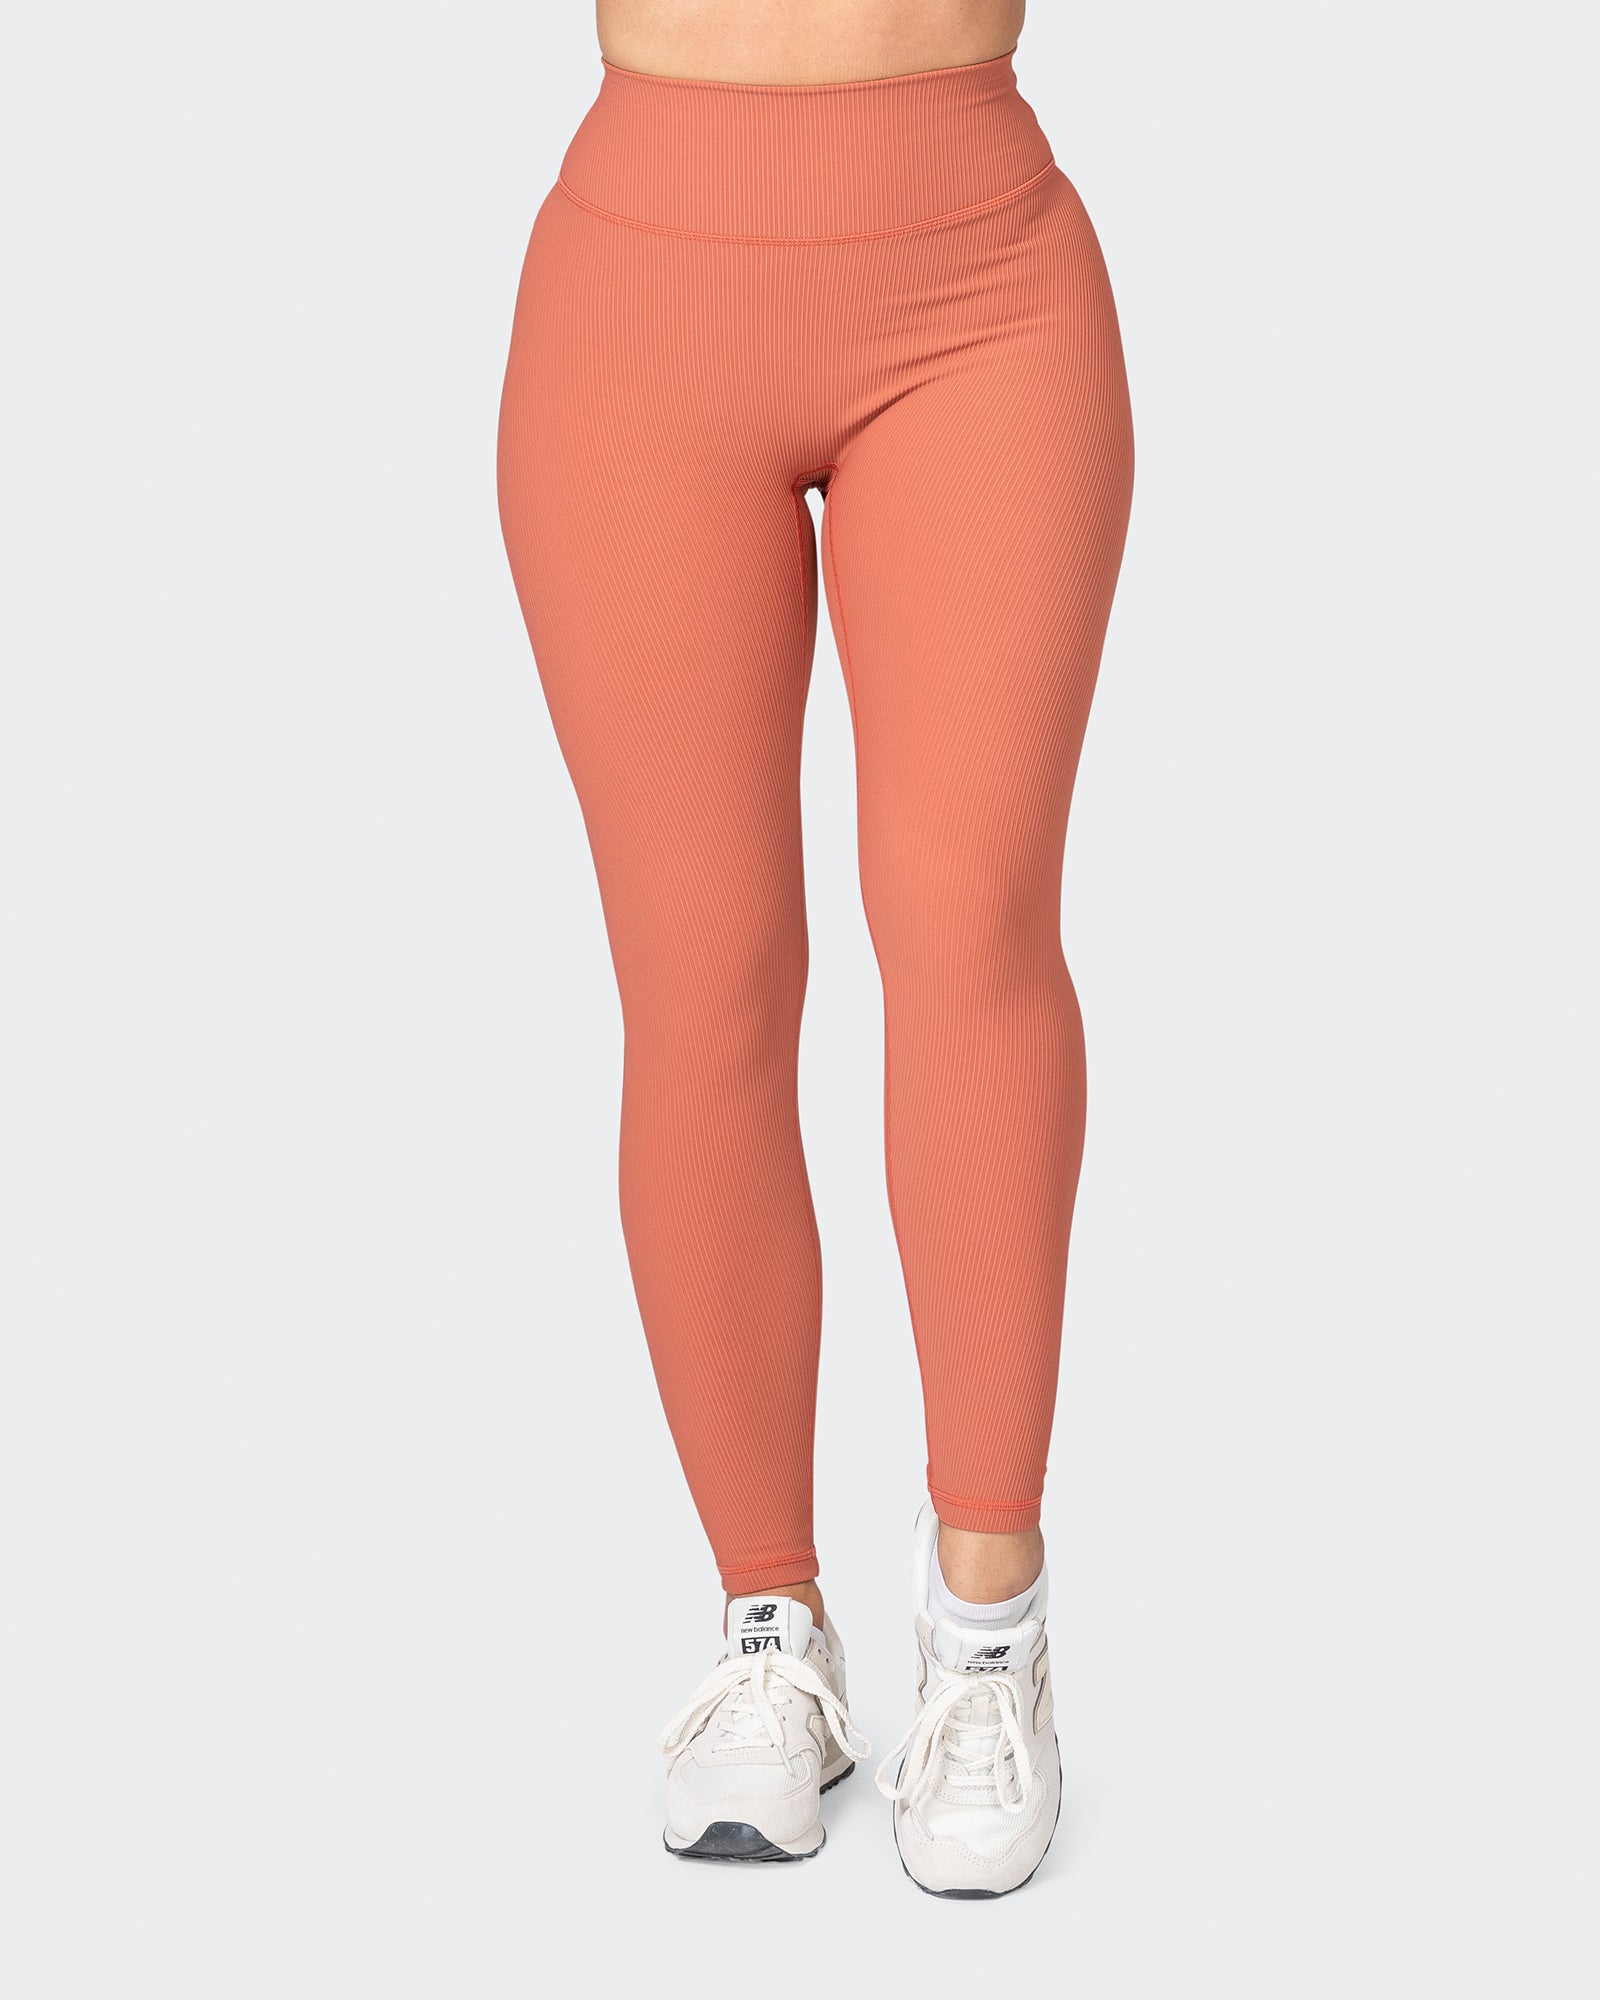 Dark Orange Ankle Length Premium Cotton Leggings for Women and Girls -  Walmart.com